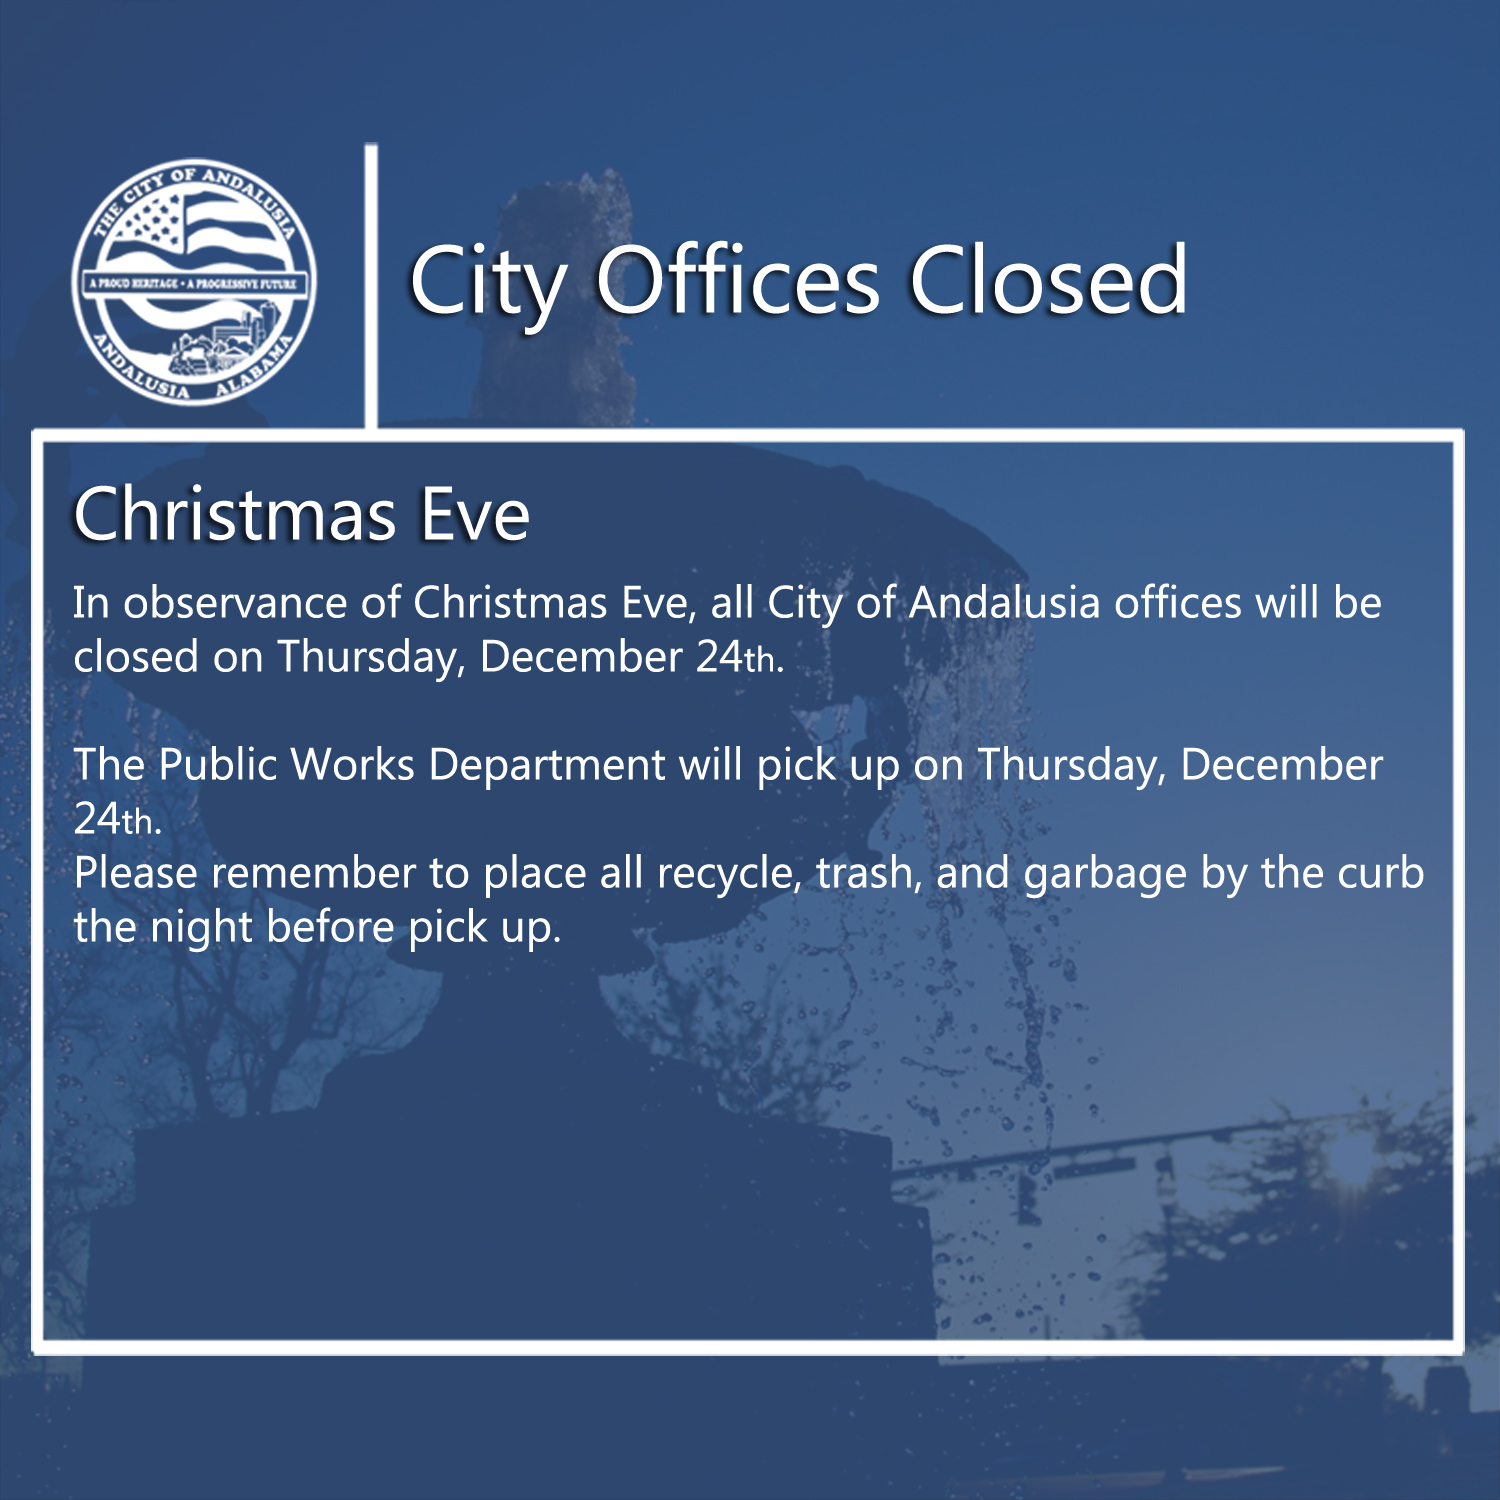 Facebook City Offices Closed Dec 24th